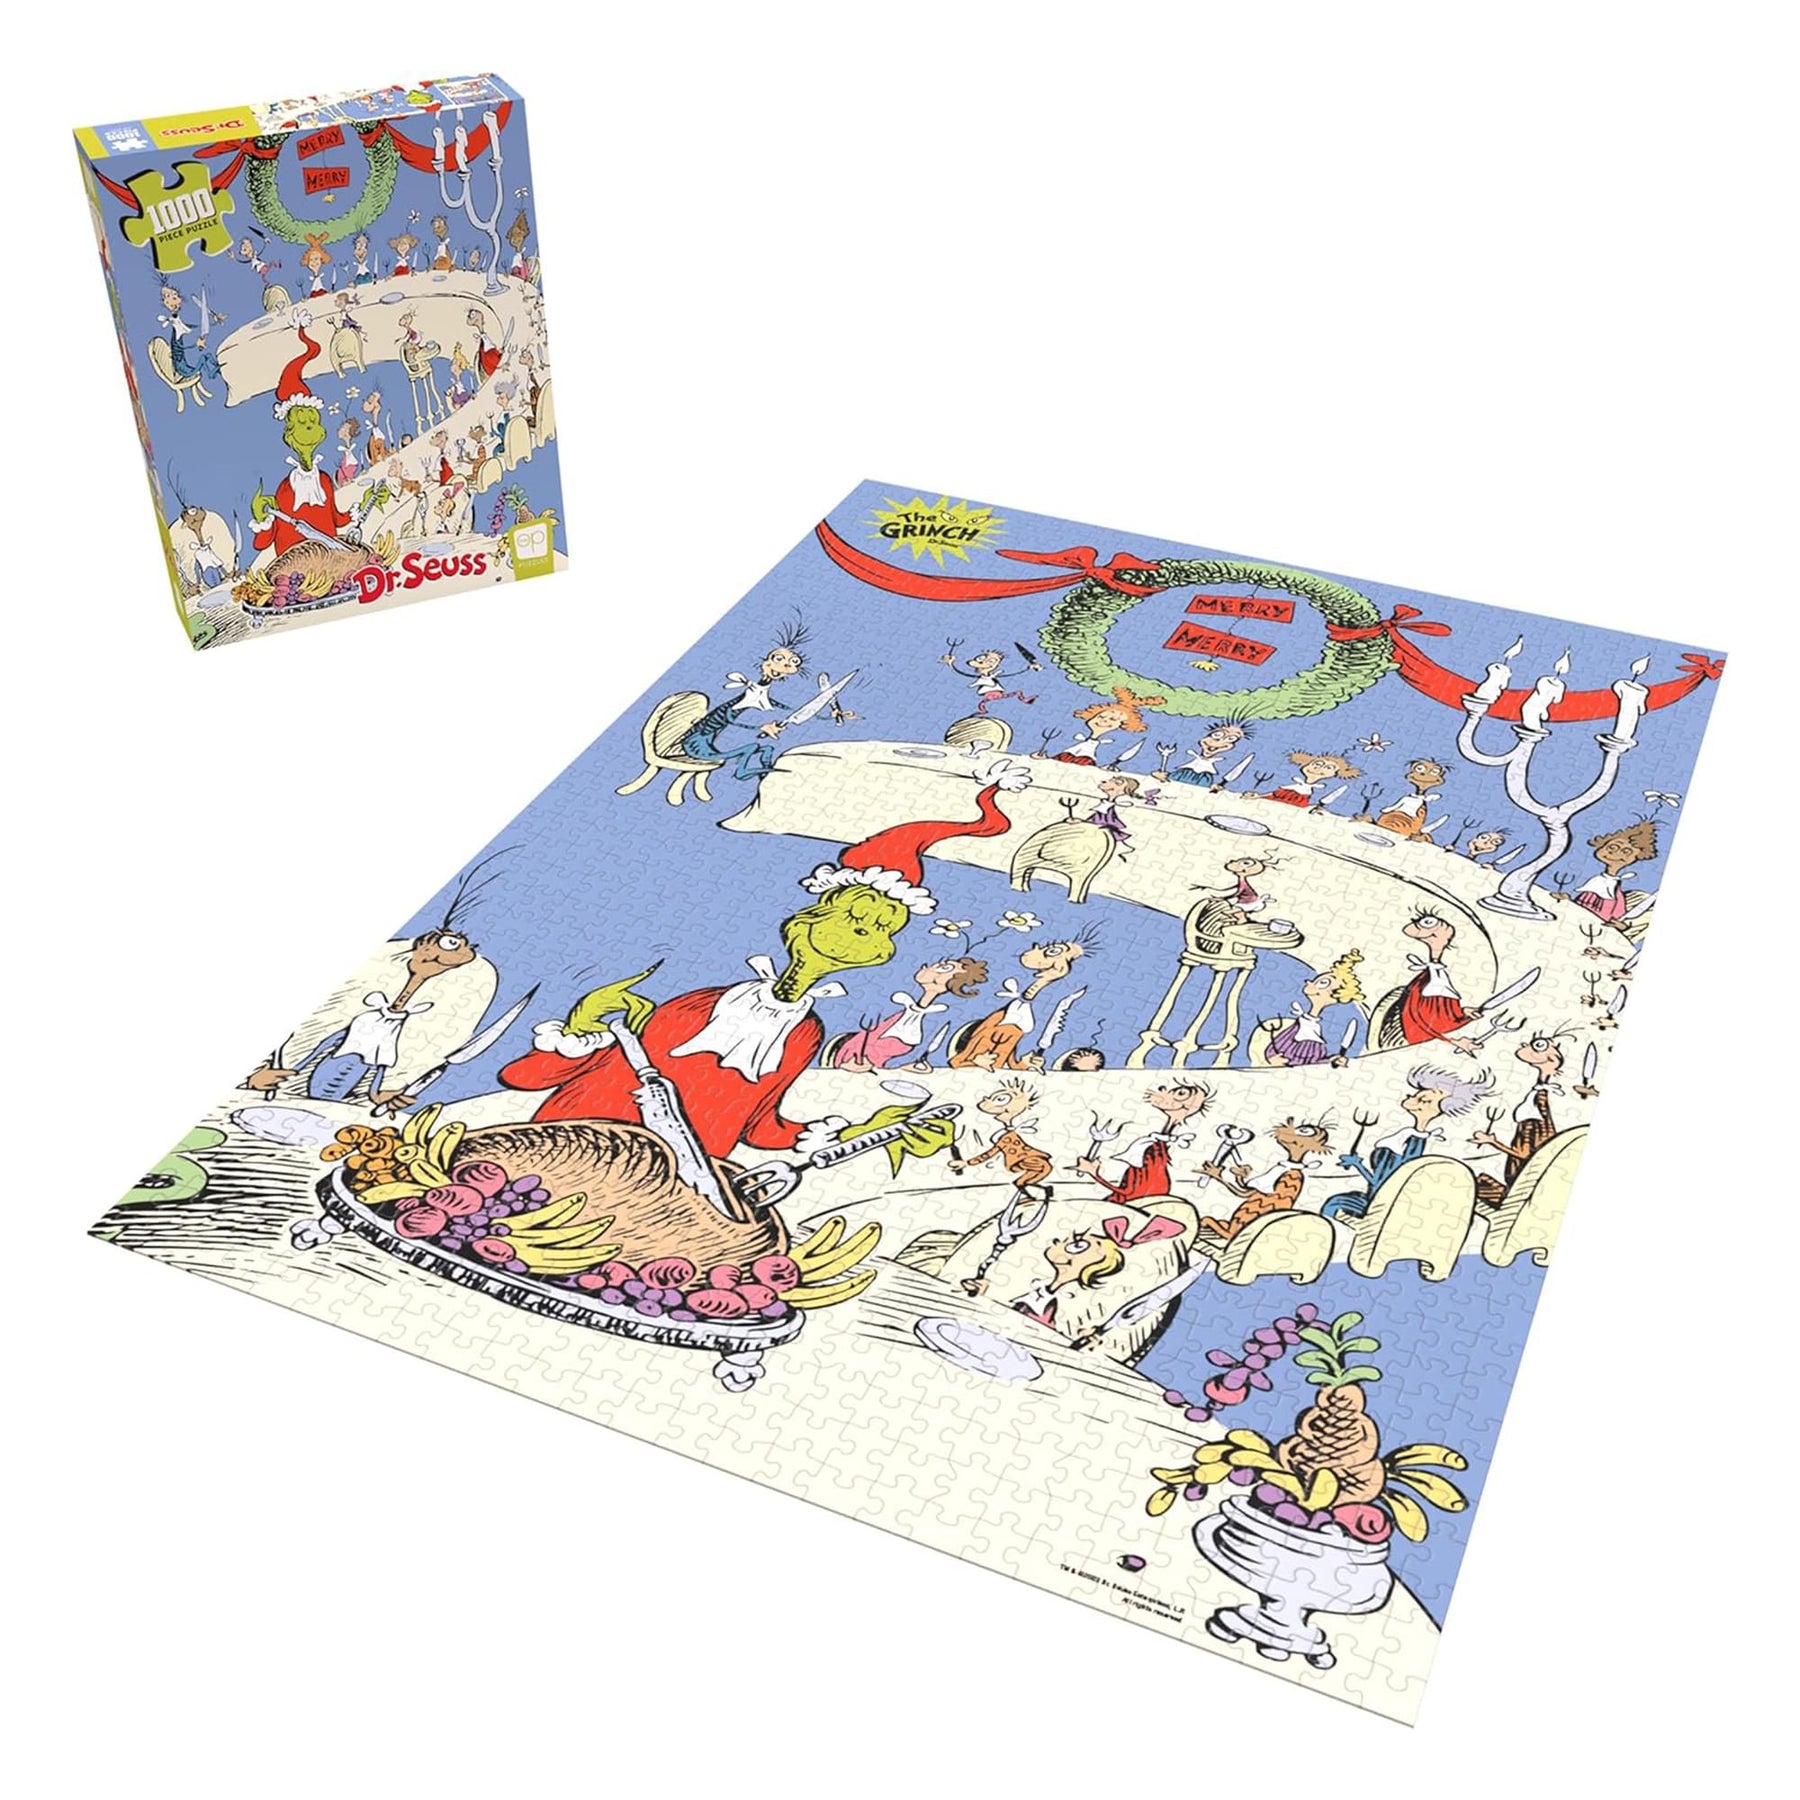 Dr. Seuss "The Grinch Feast" 1000 Piece Jigsaw Puzzle